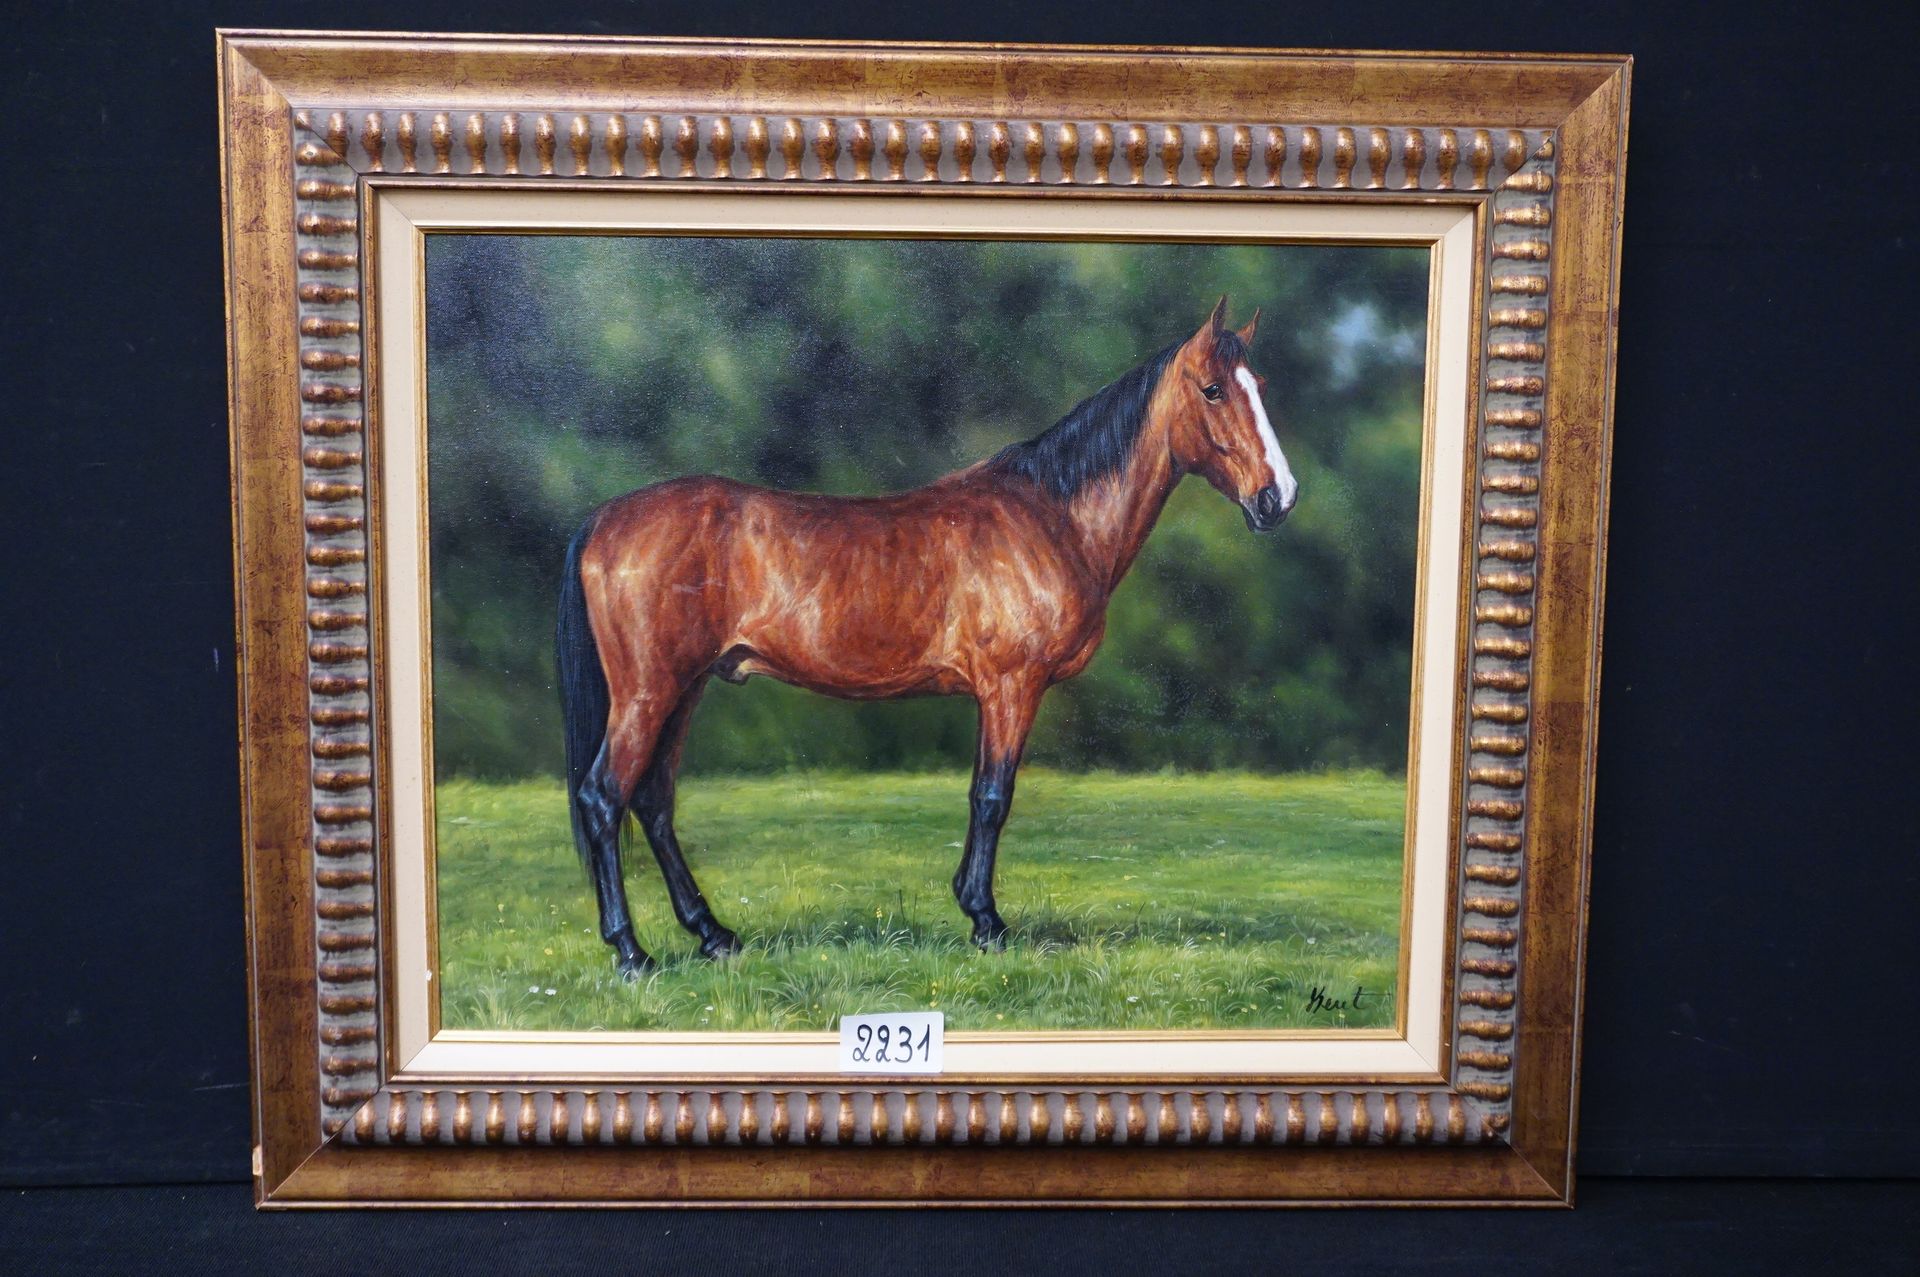 KENT "Cavallo - purosangue arabo" - Olio su tela - Firmato - 50 x 60 cm